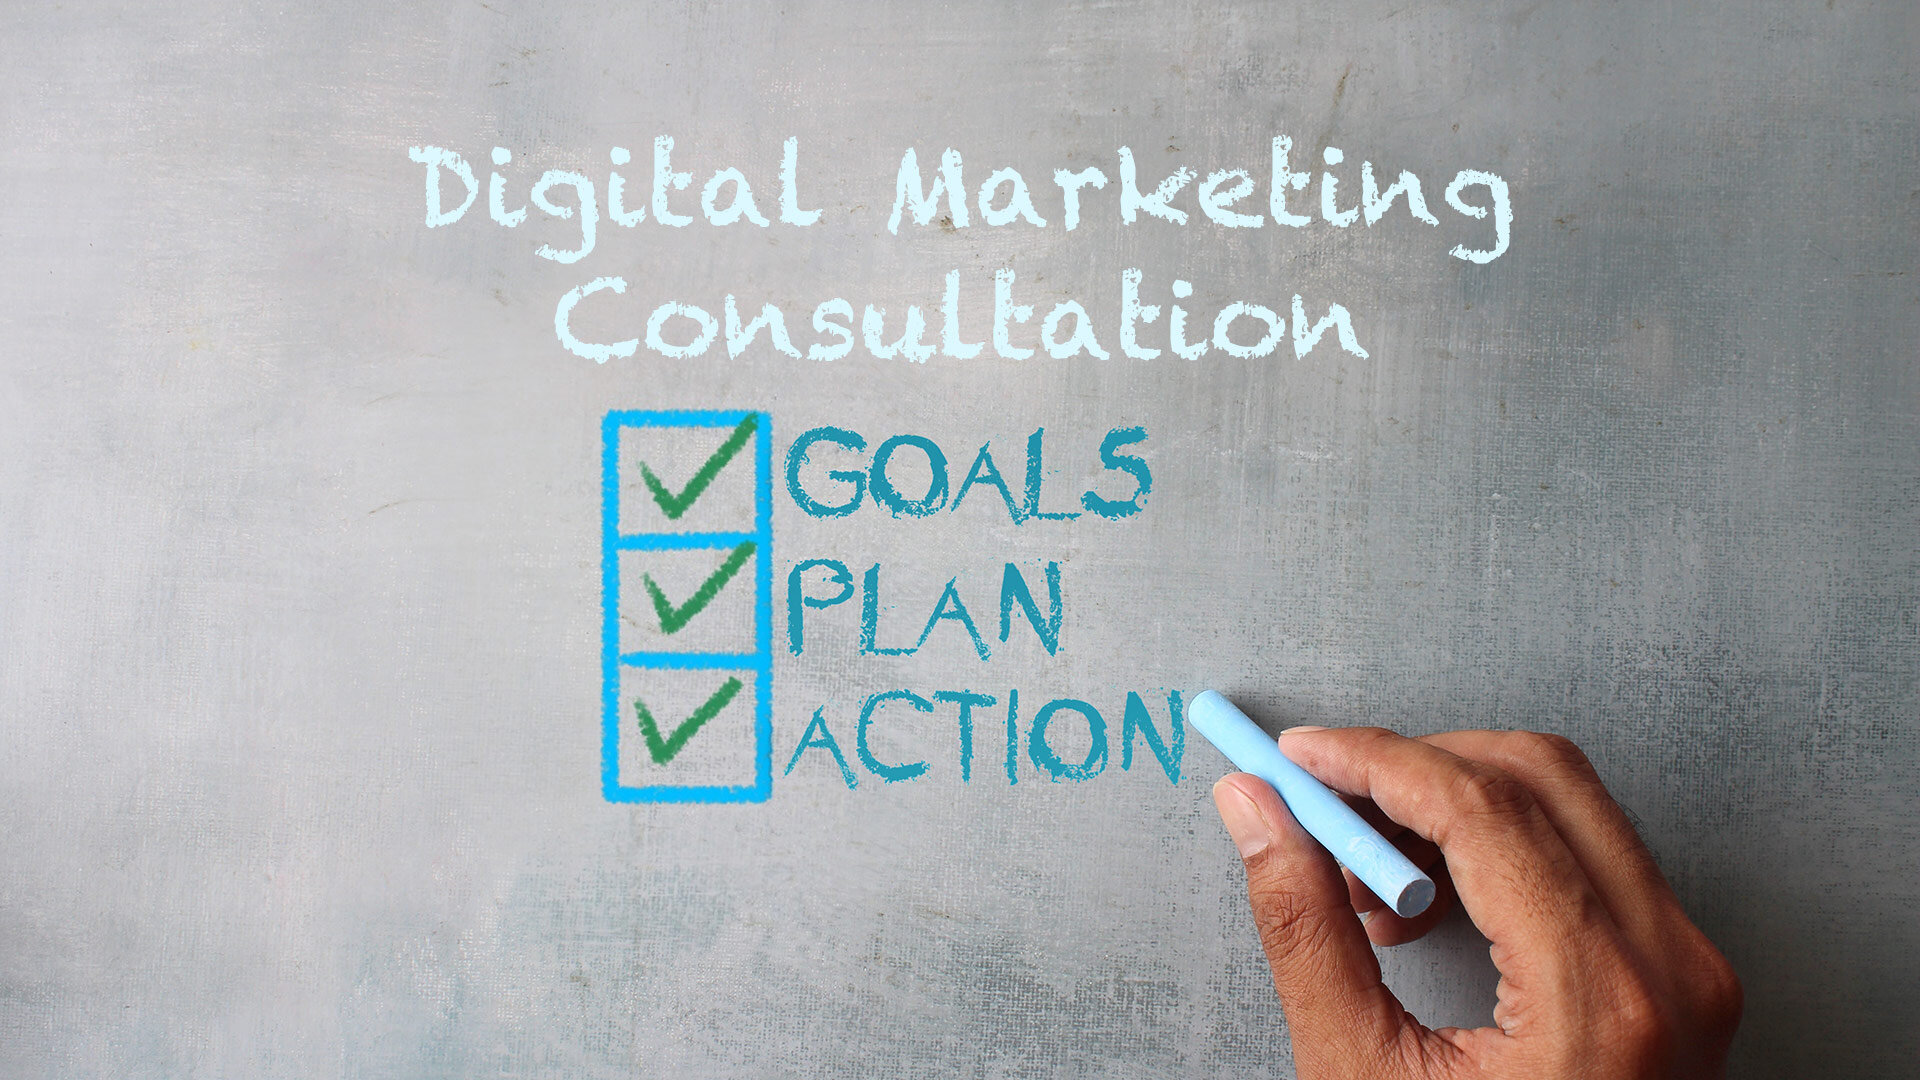 Digital Marketing Consultation looks at Goals Plan Action